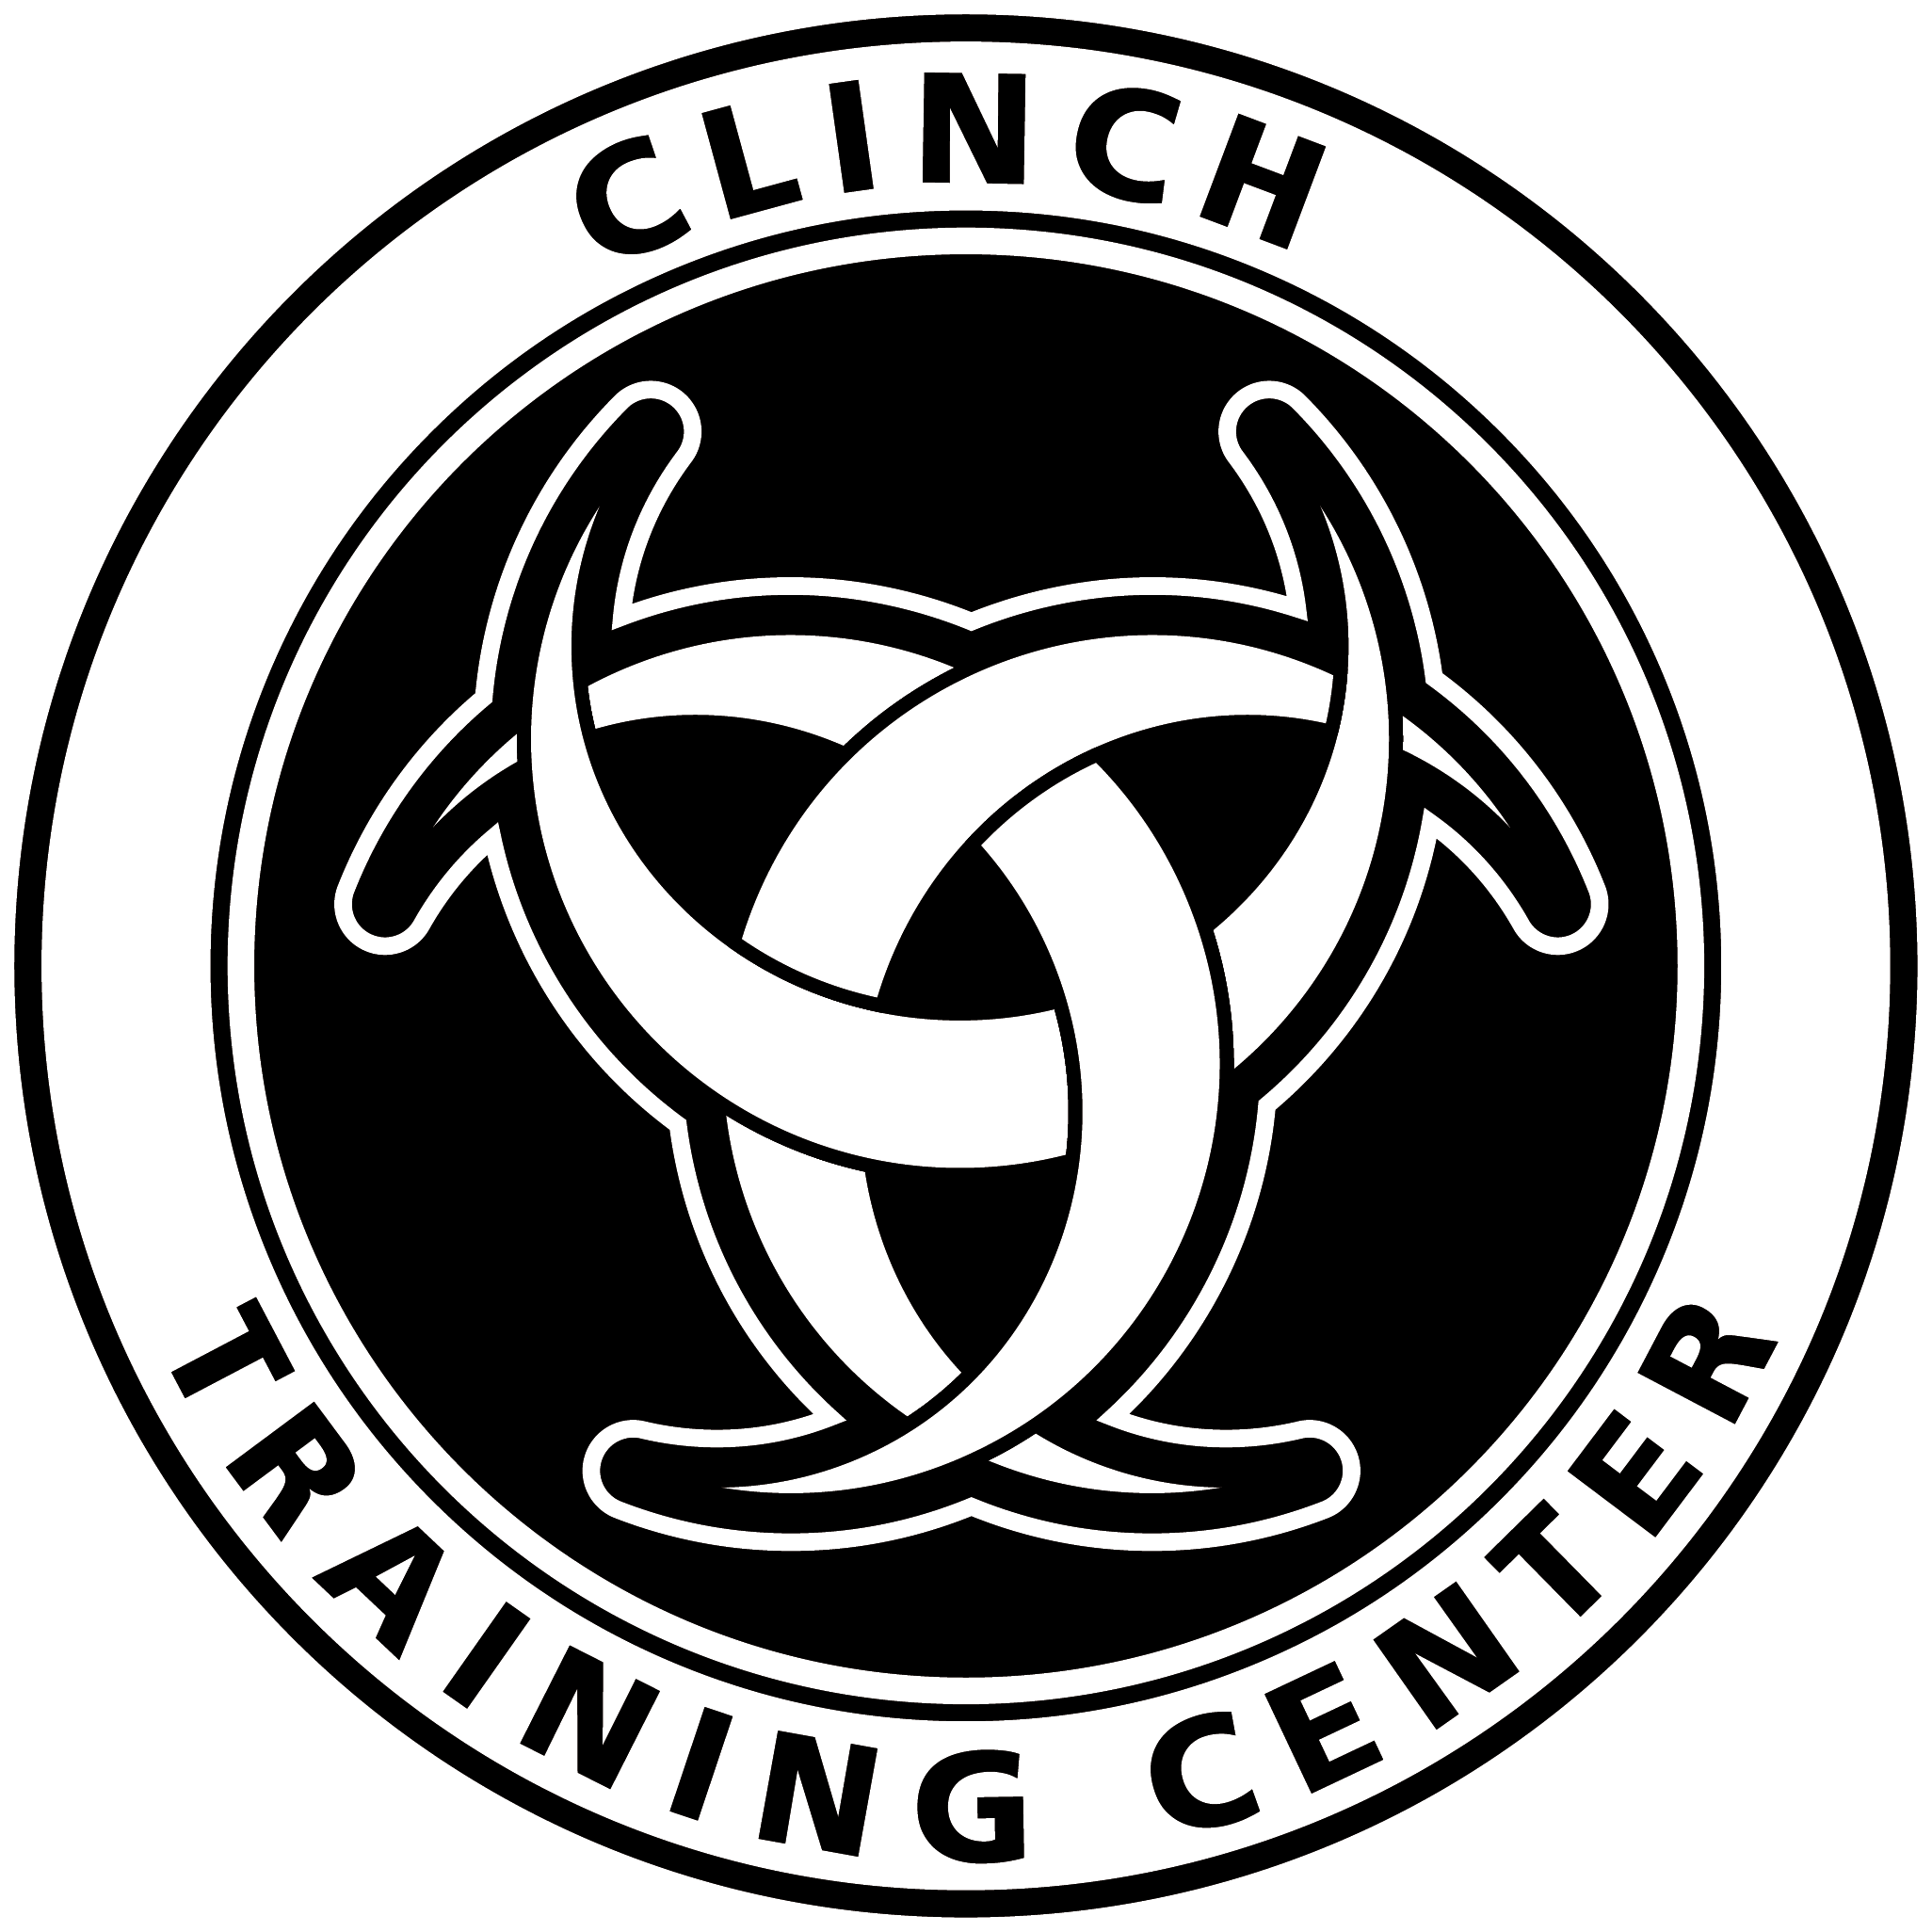 Clinch Training Center